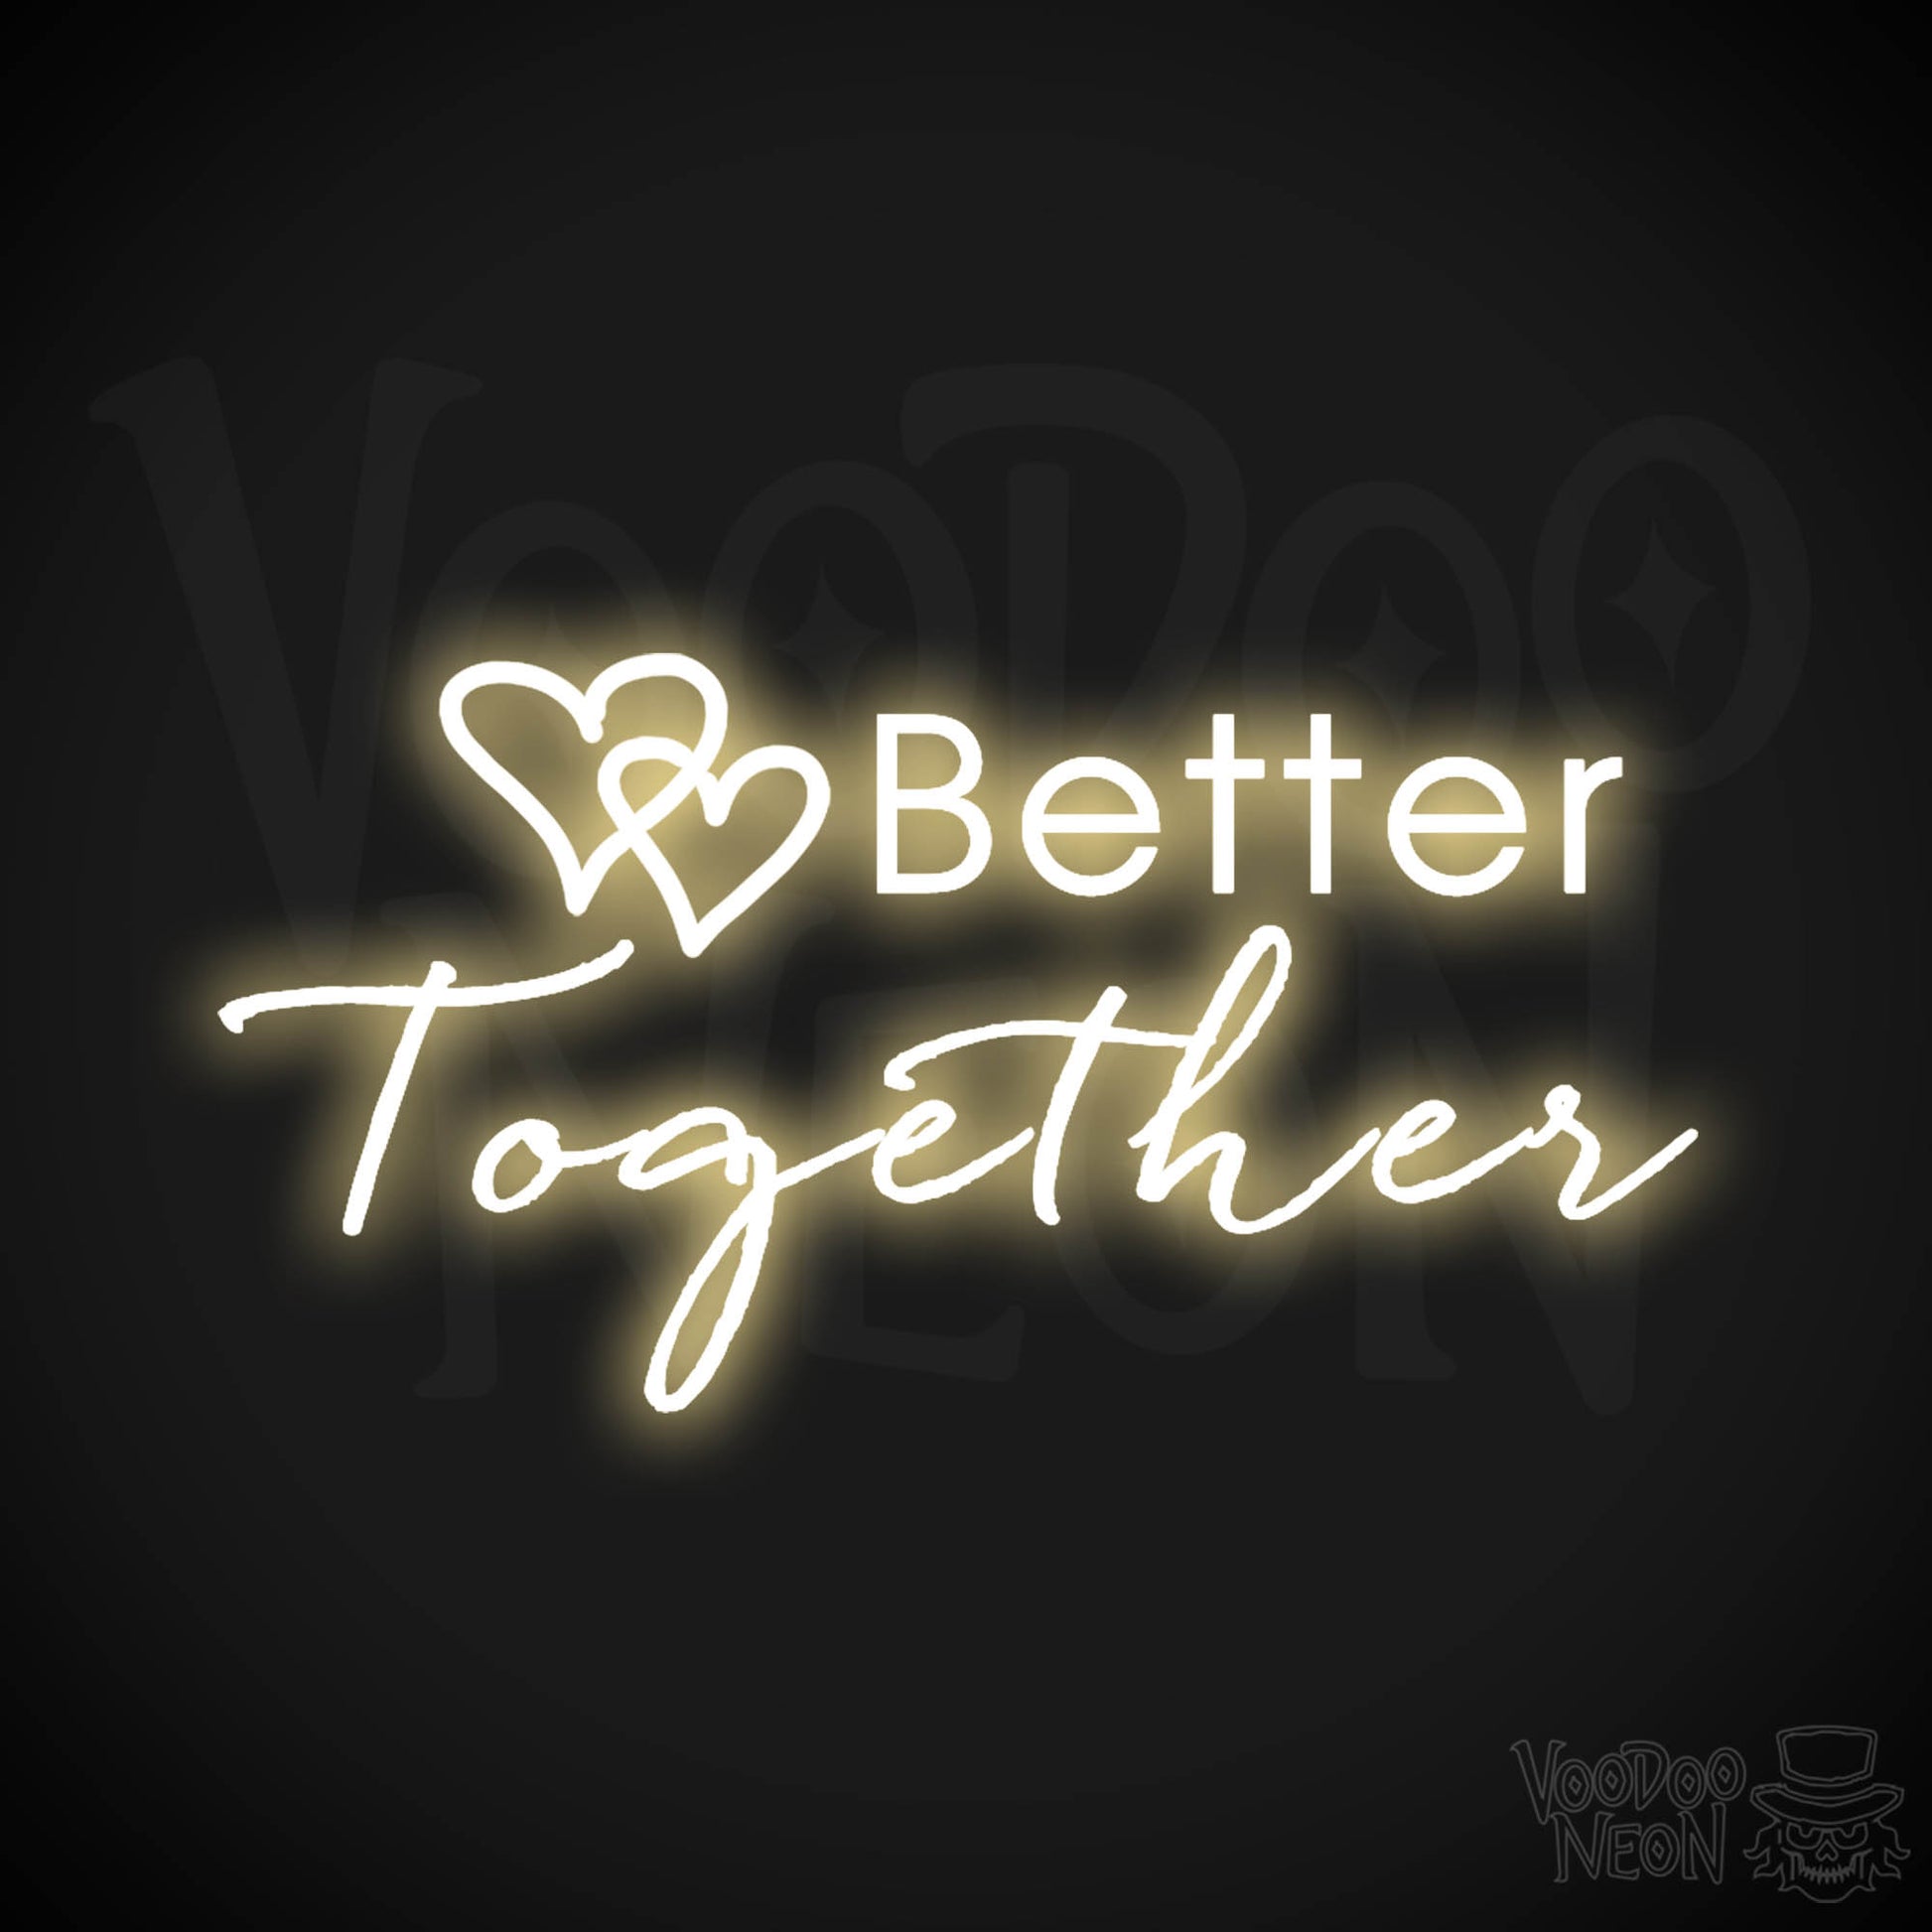 Better Together Neon Sign - Neon Better Together Sign - LED Light Up - Color Warm White